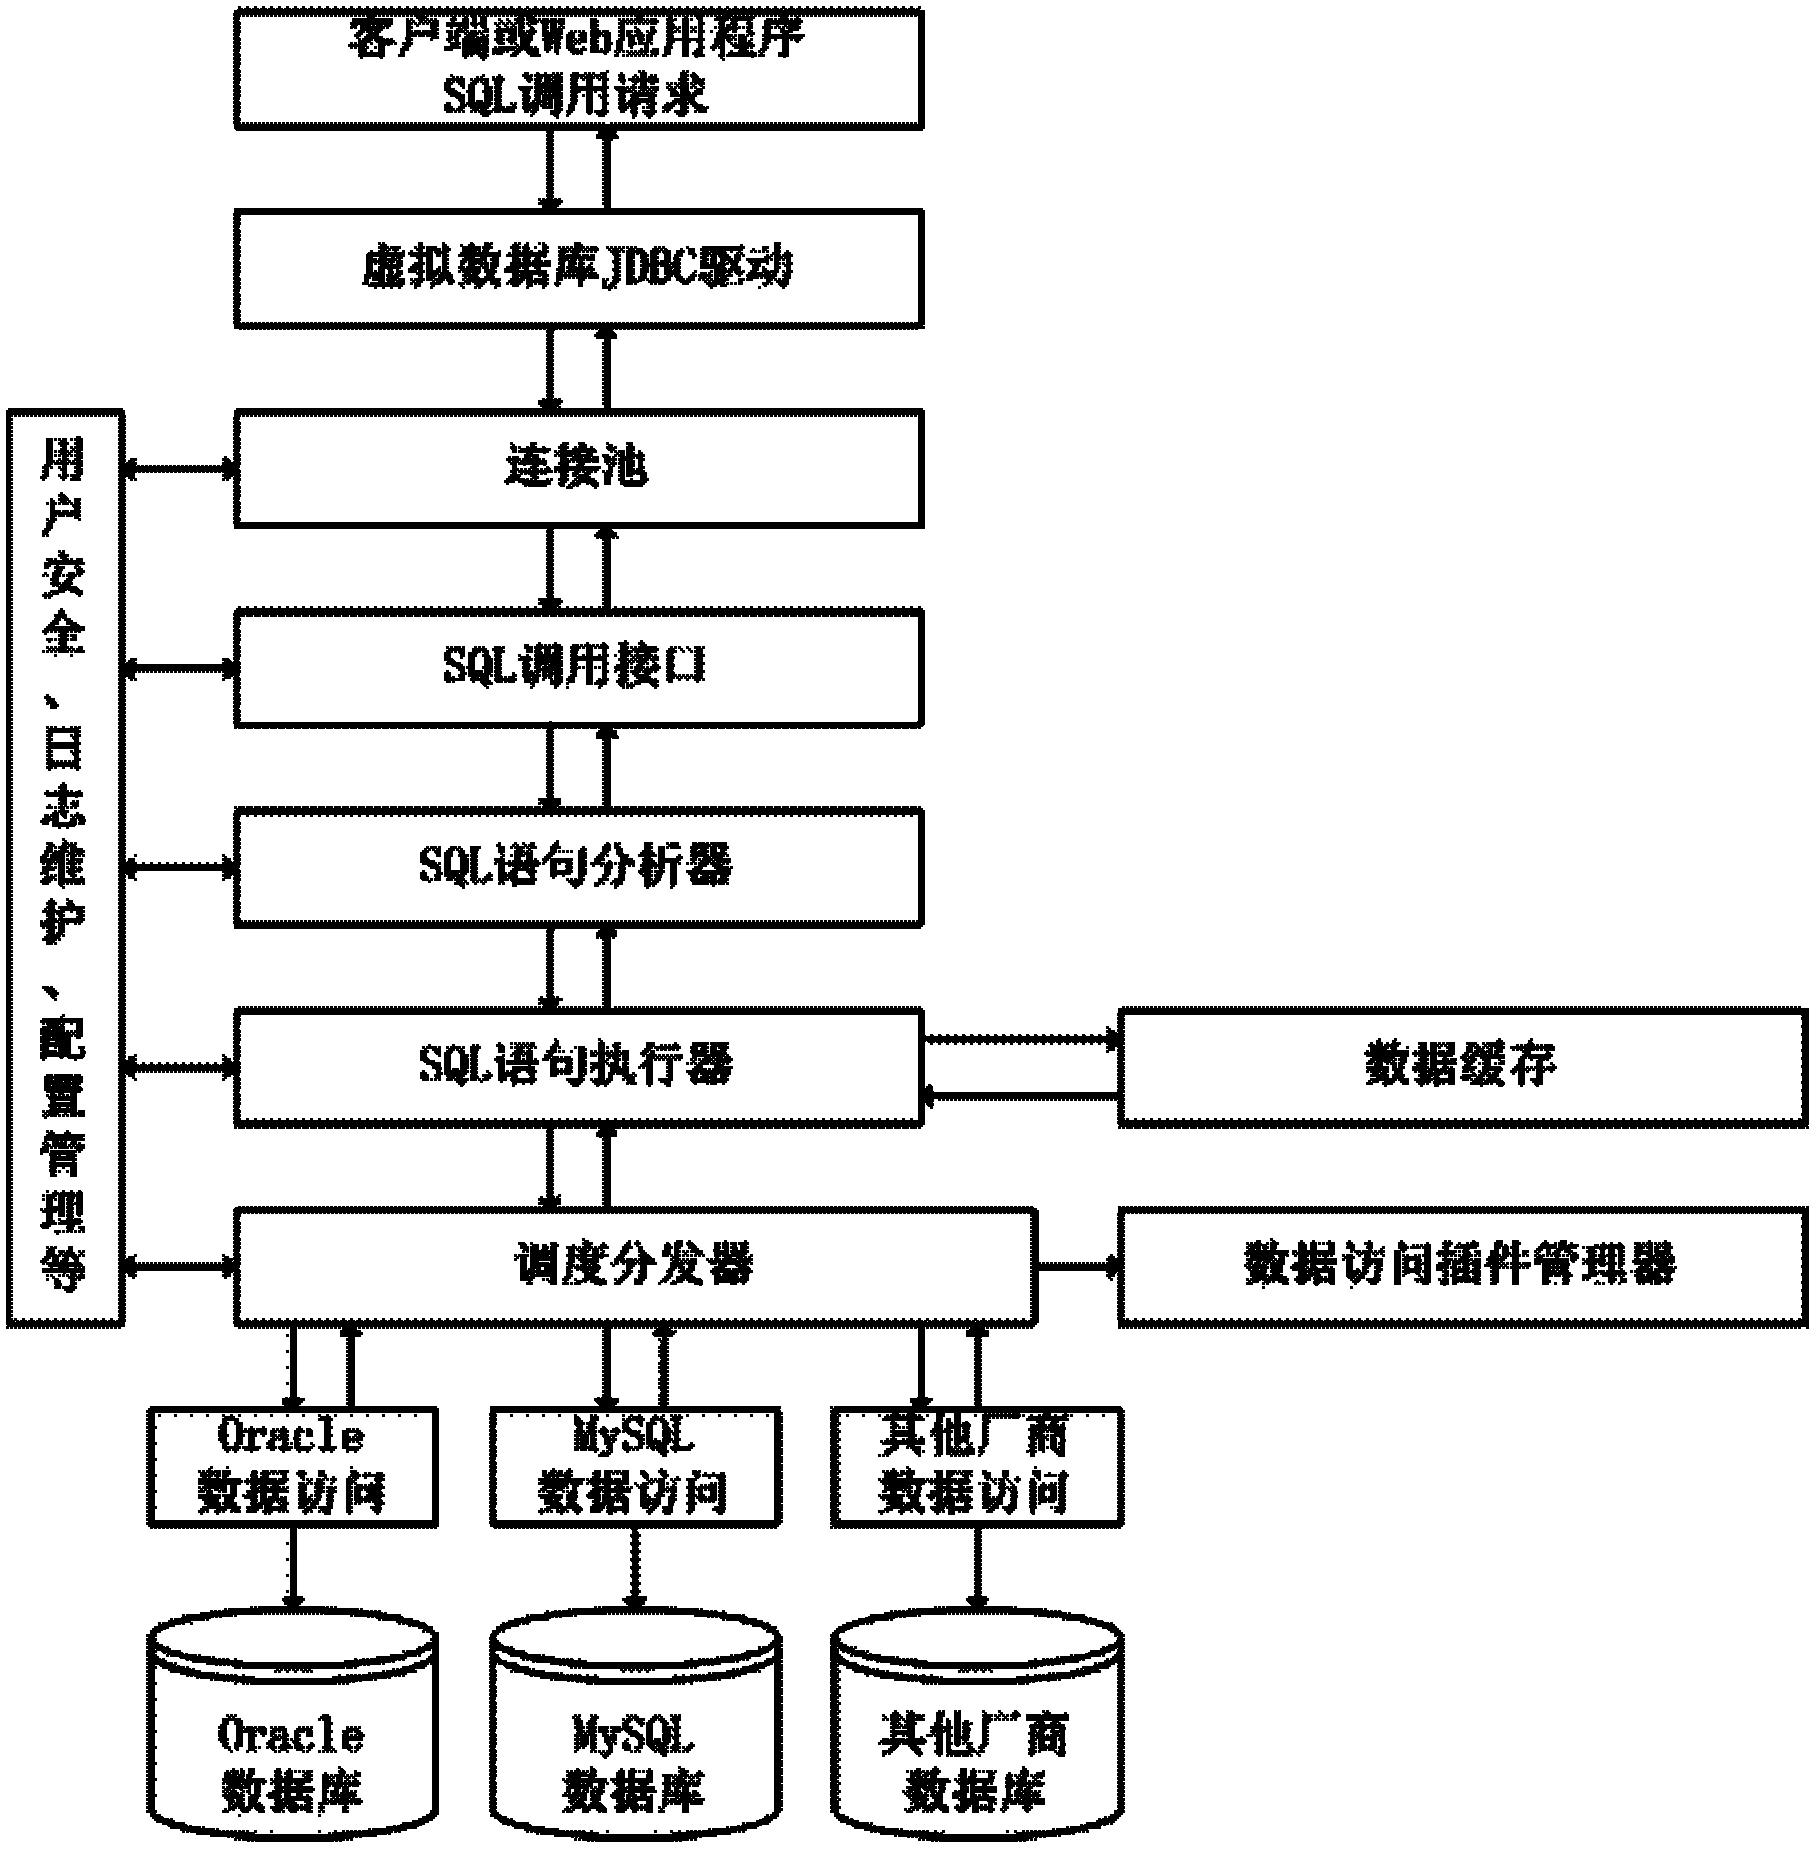 Java data base connectivity (JDBC)-based data distributed processing method